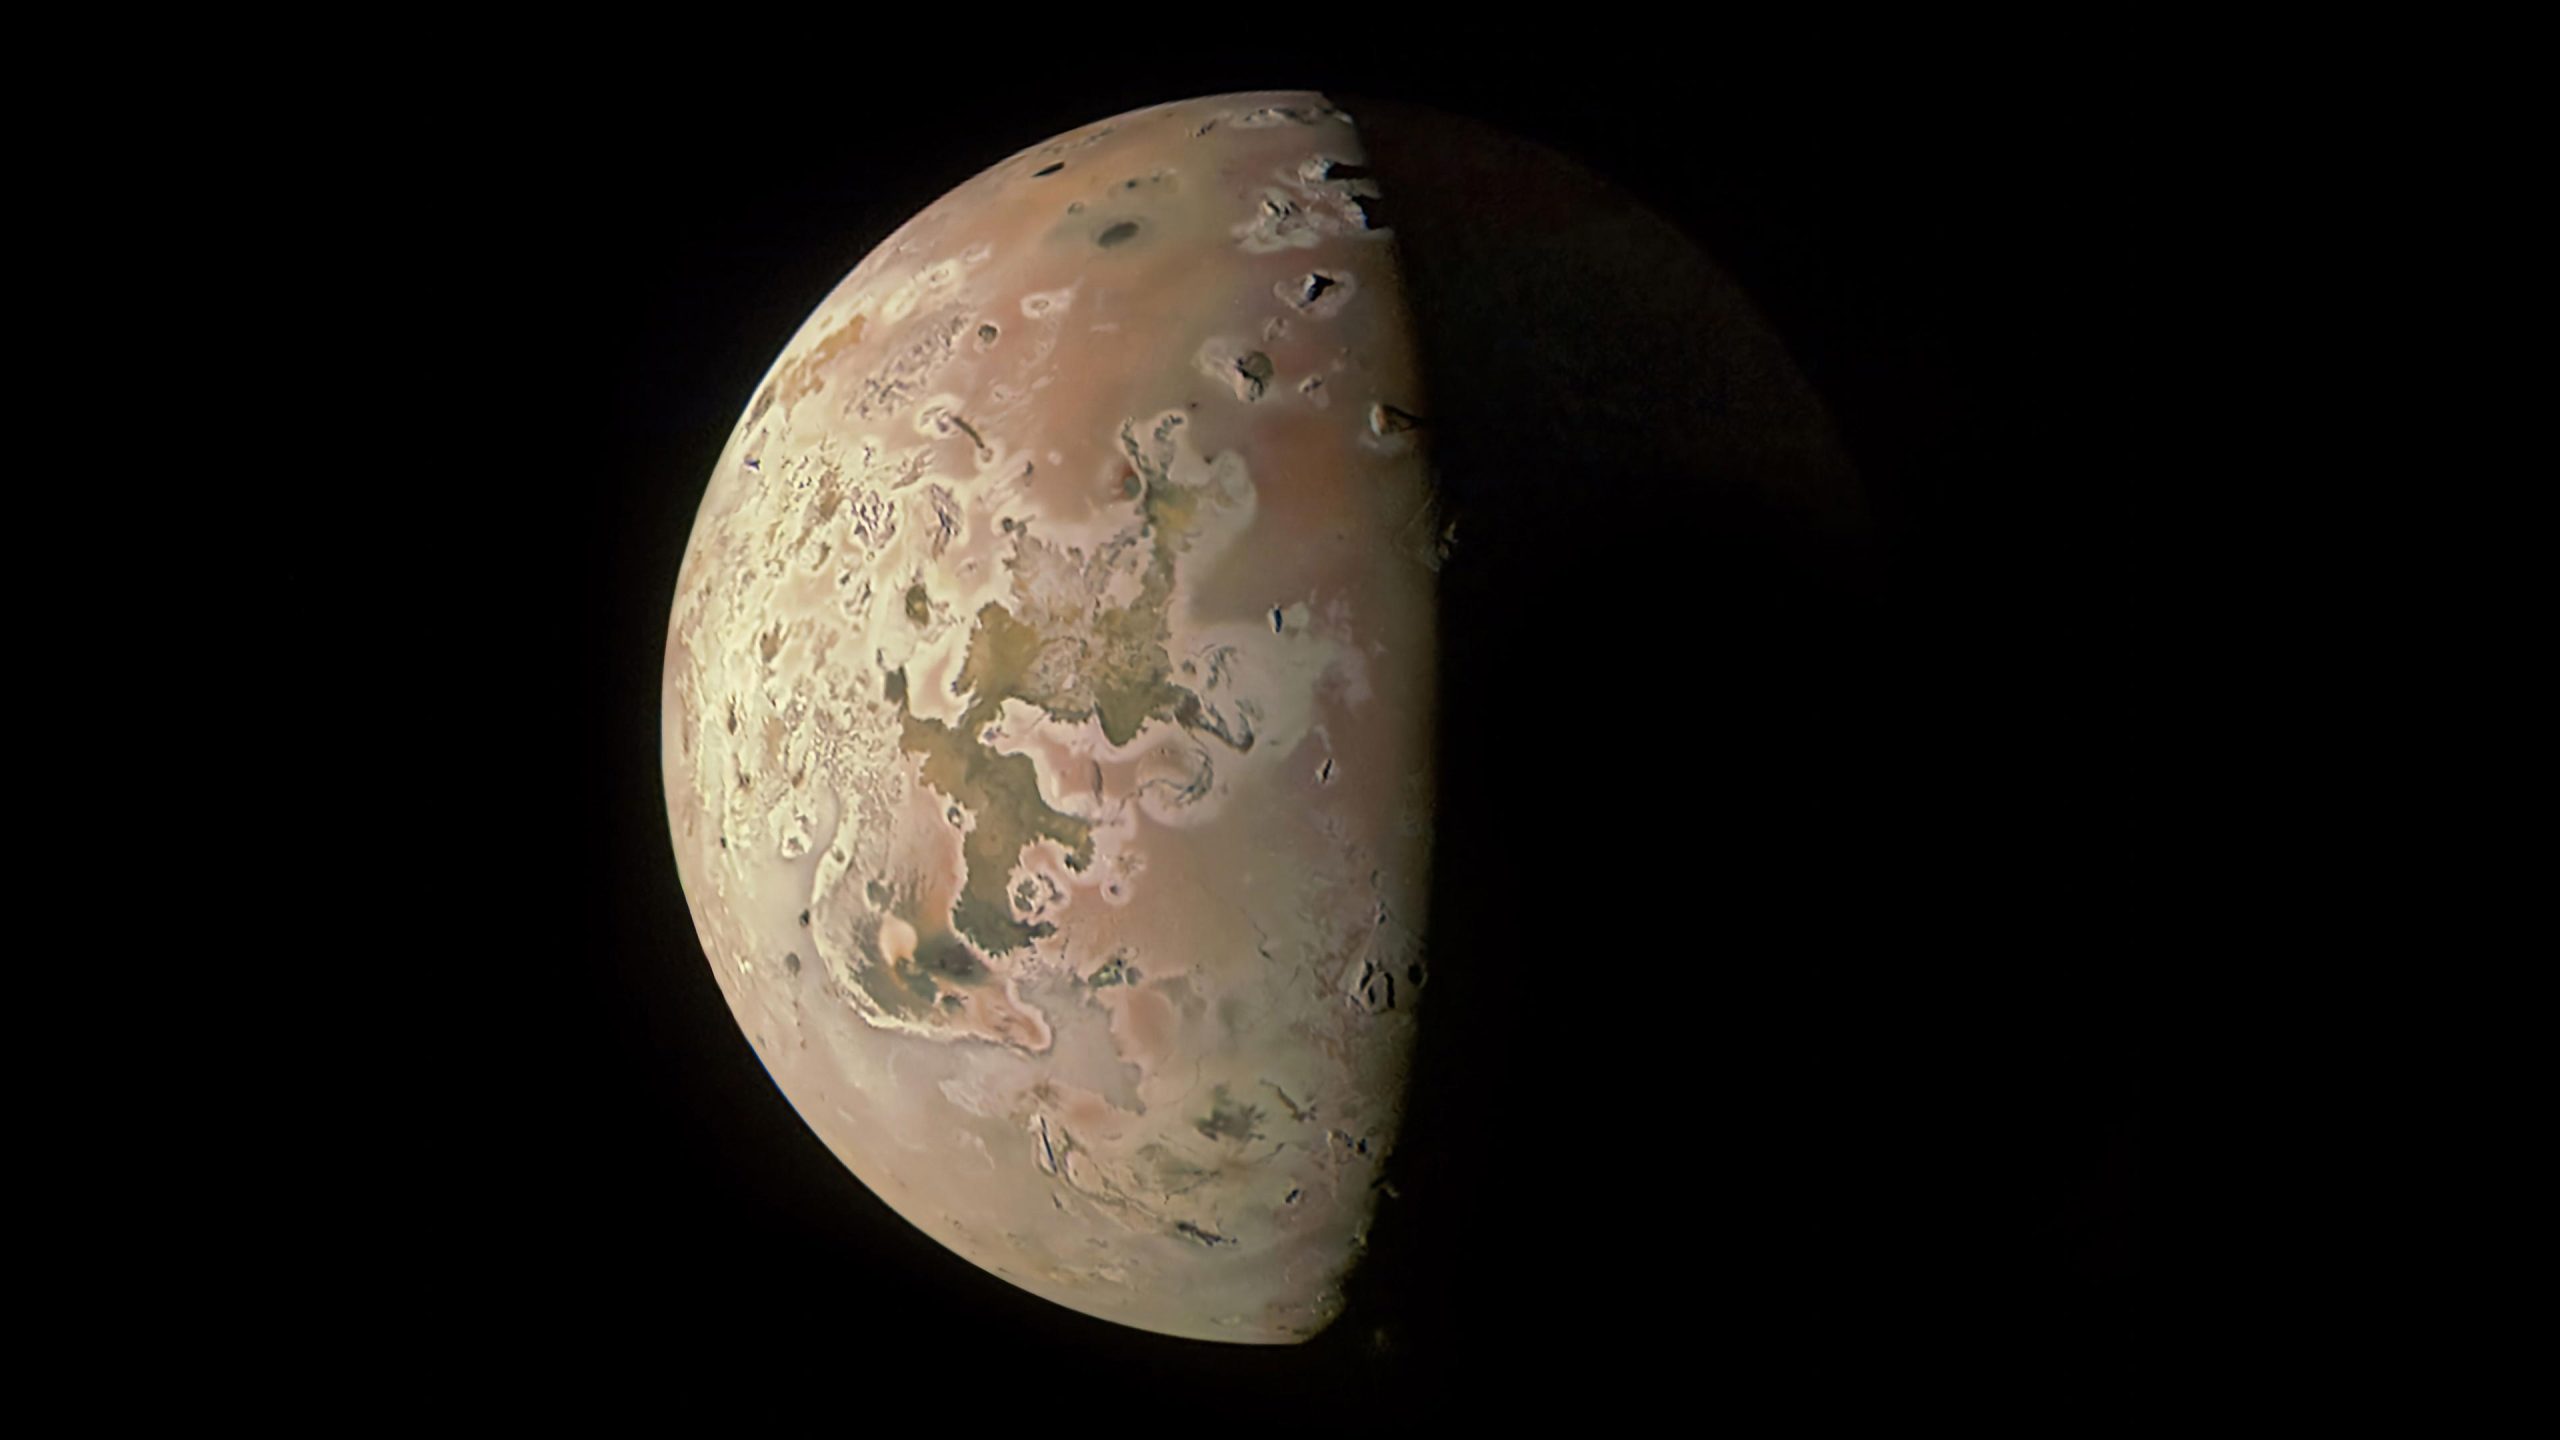 North-Polar-Region-of-the-Jovian-Moon-Io-scaled.jpg